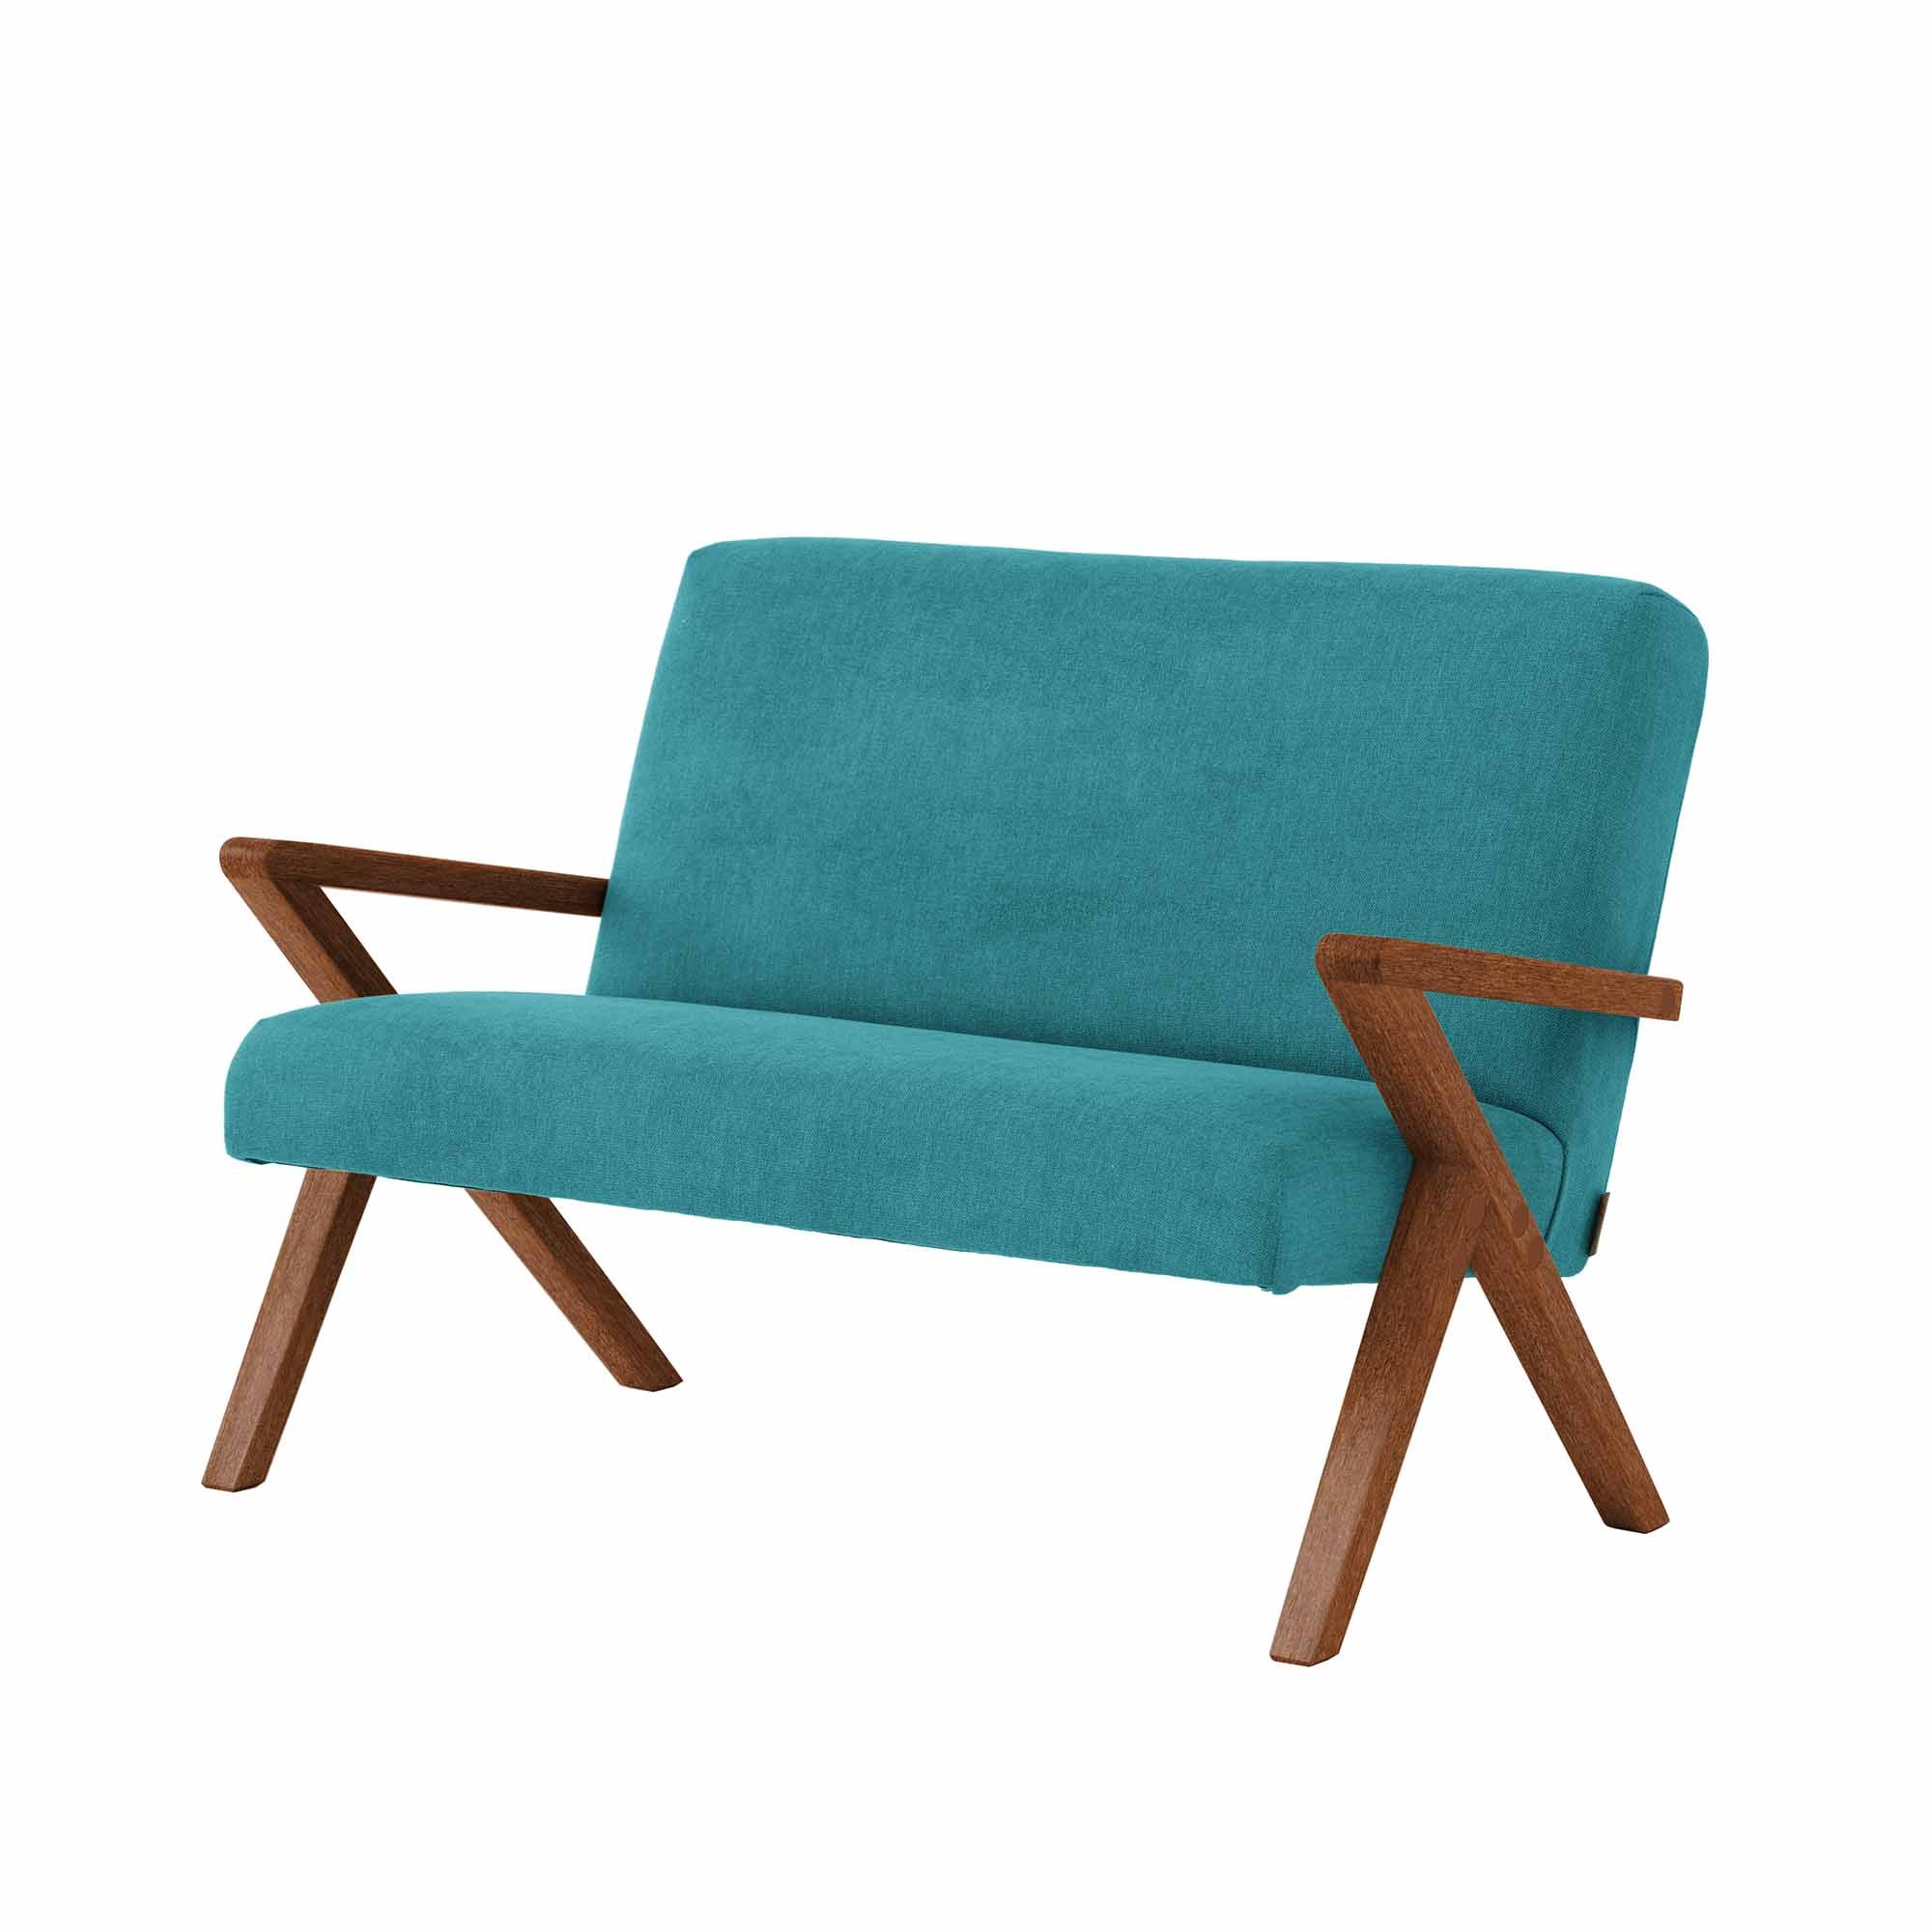  2 Seater Sofa, Beech Wood Frame, Walnut Colourblue fabric, half-side view